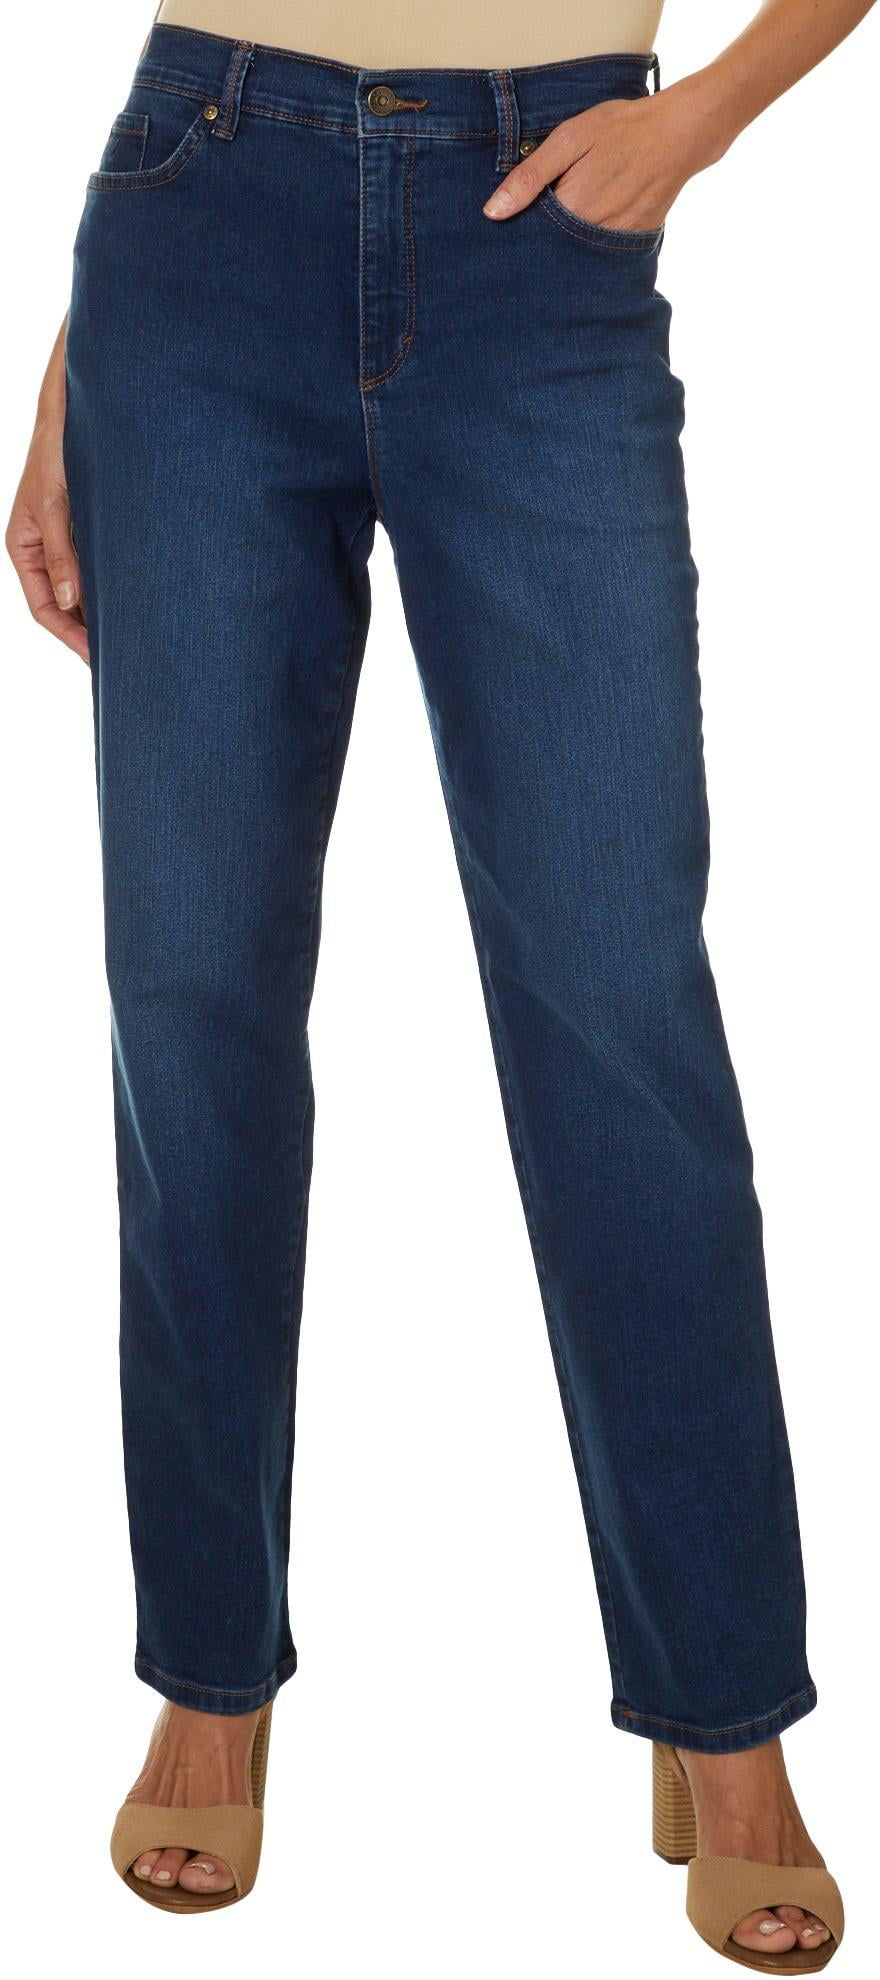 gloria vanderbilt embellished jeans